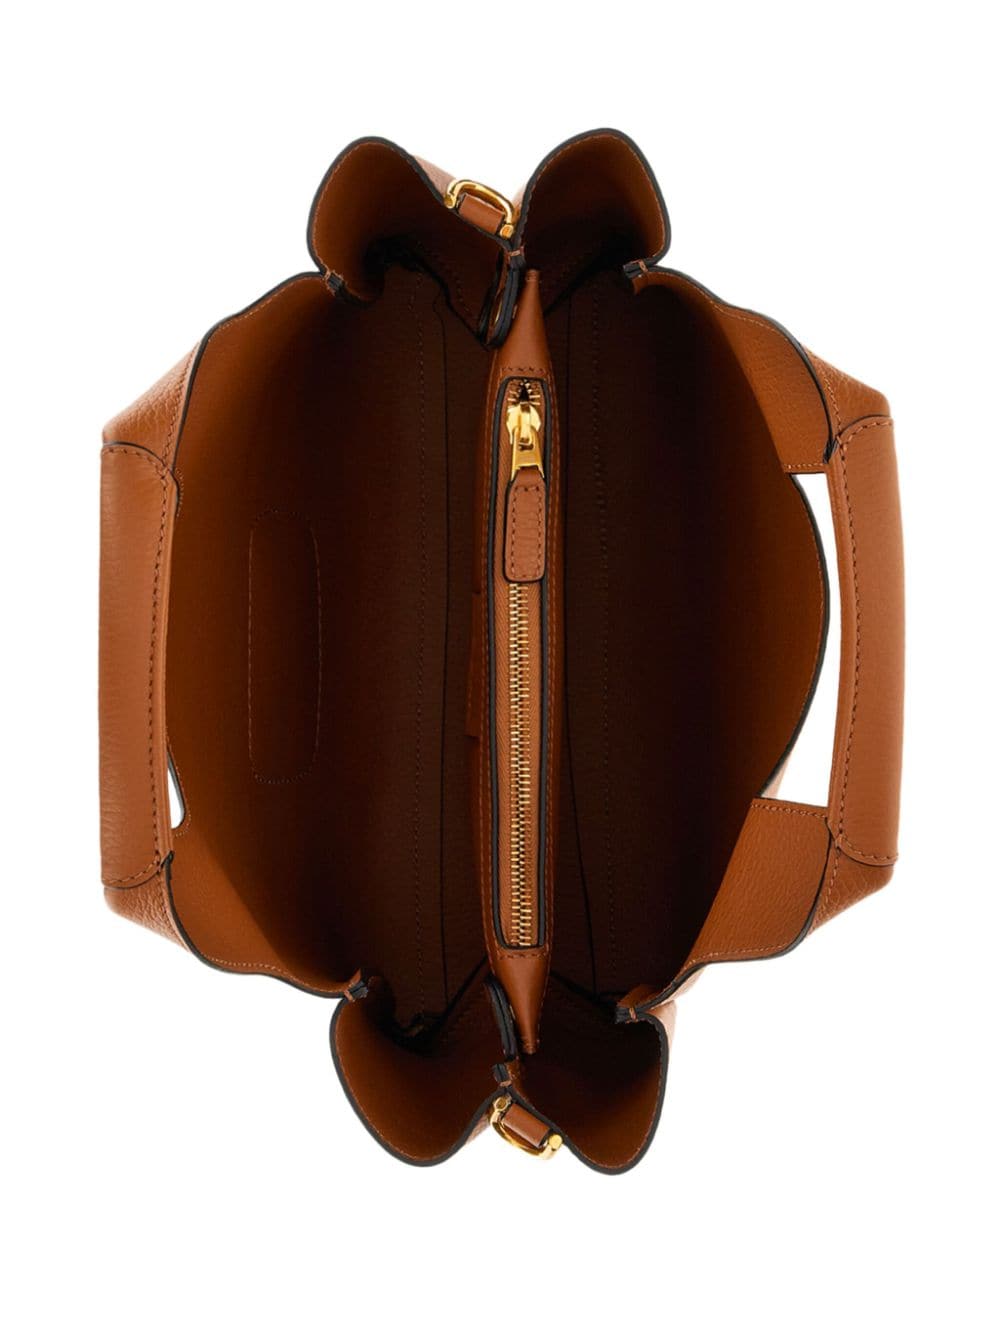 HOGAN H-Handbag SMALL LEATHER Tote Handbag Handbag